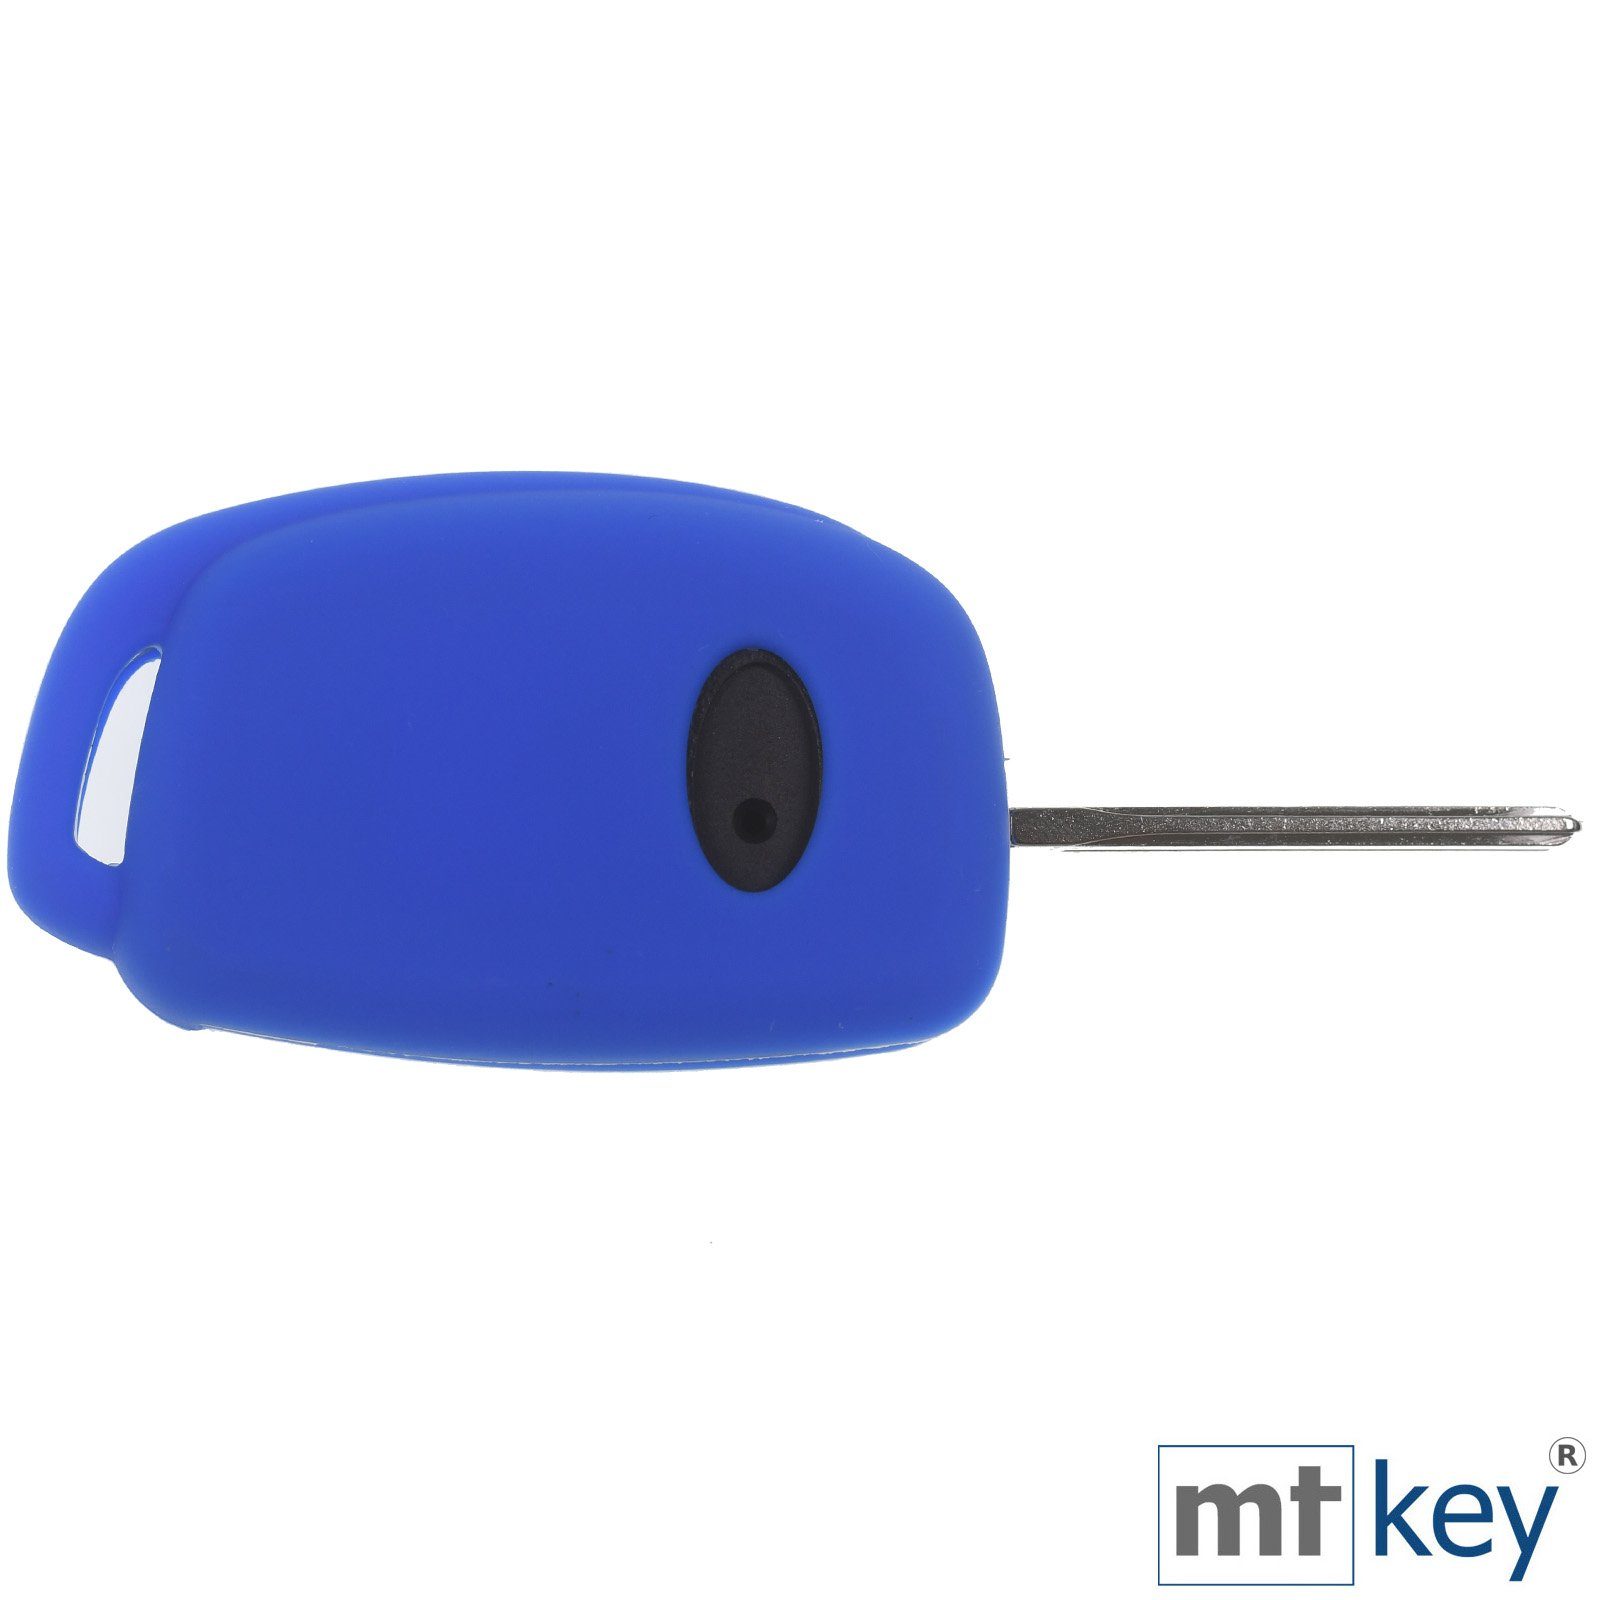 mt-key Schlüsseltasche Autoschlüssel Accent i40 Knopf für + Wabe Klappschlüssel i20 ix25 Blau Silikon im 3 Hyundai ix35 Schlüsselband, i10 Schutzhülle Tucson Design